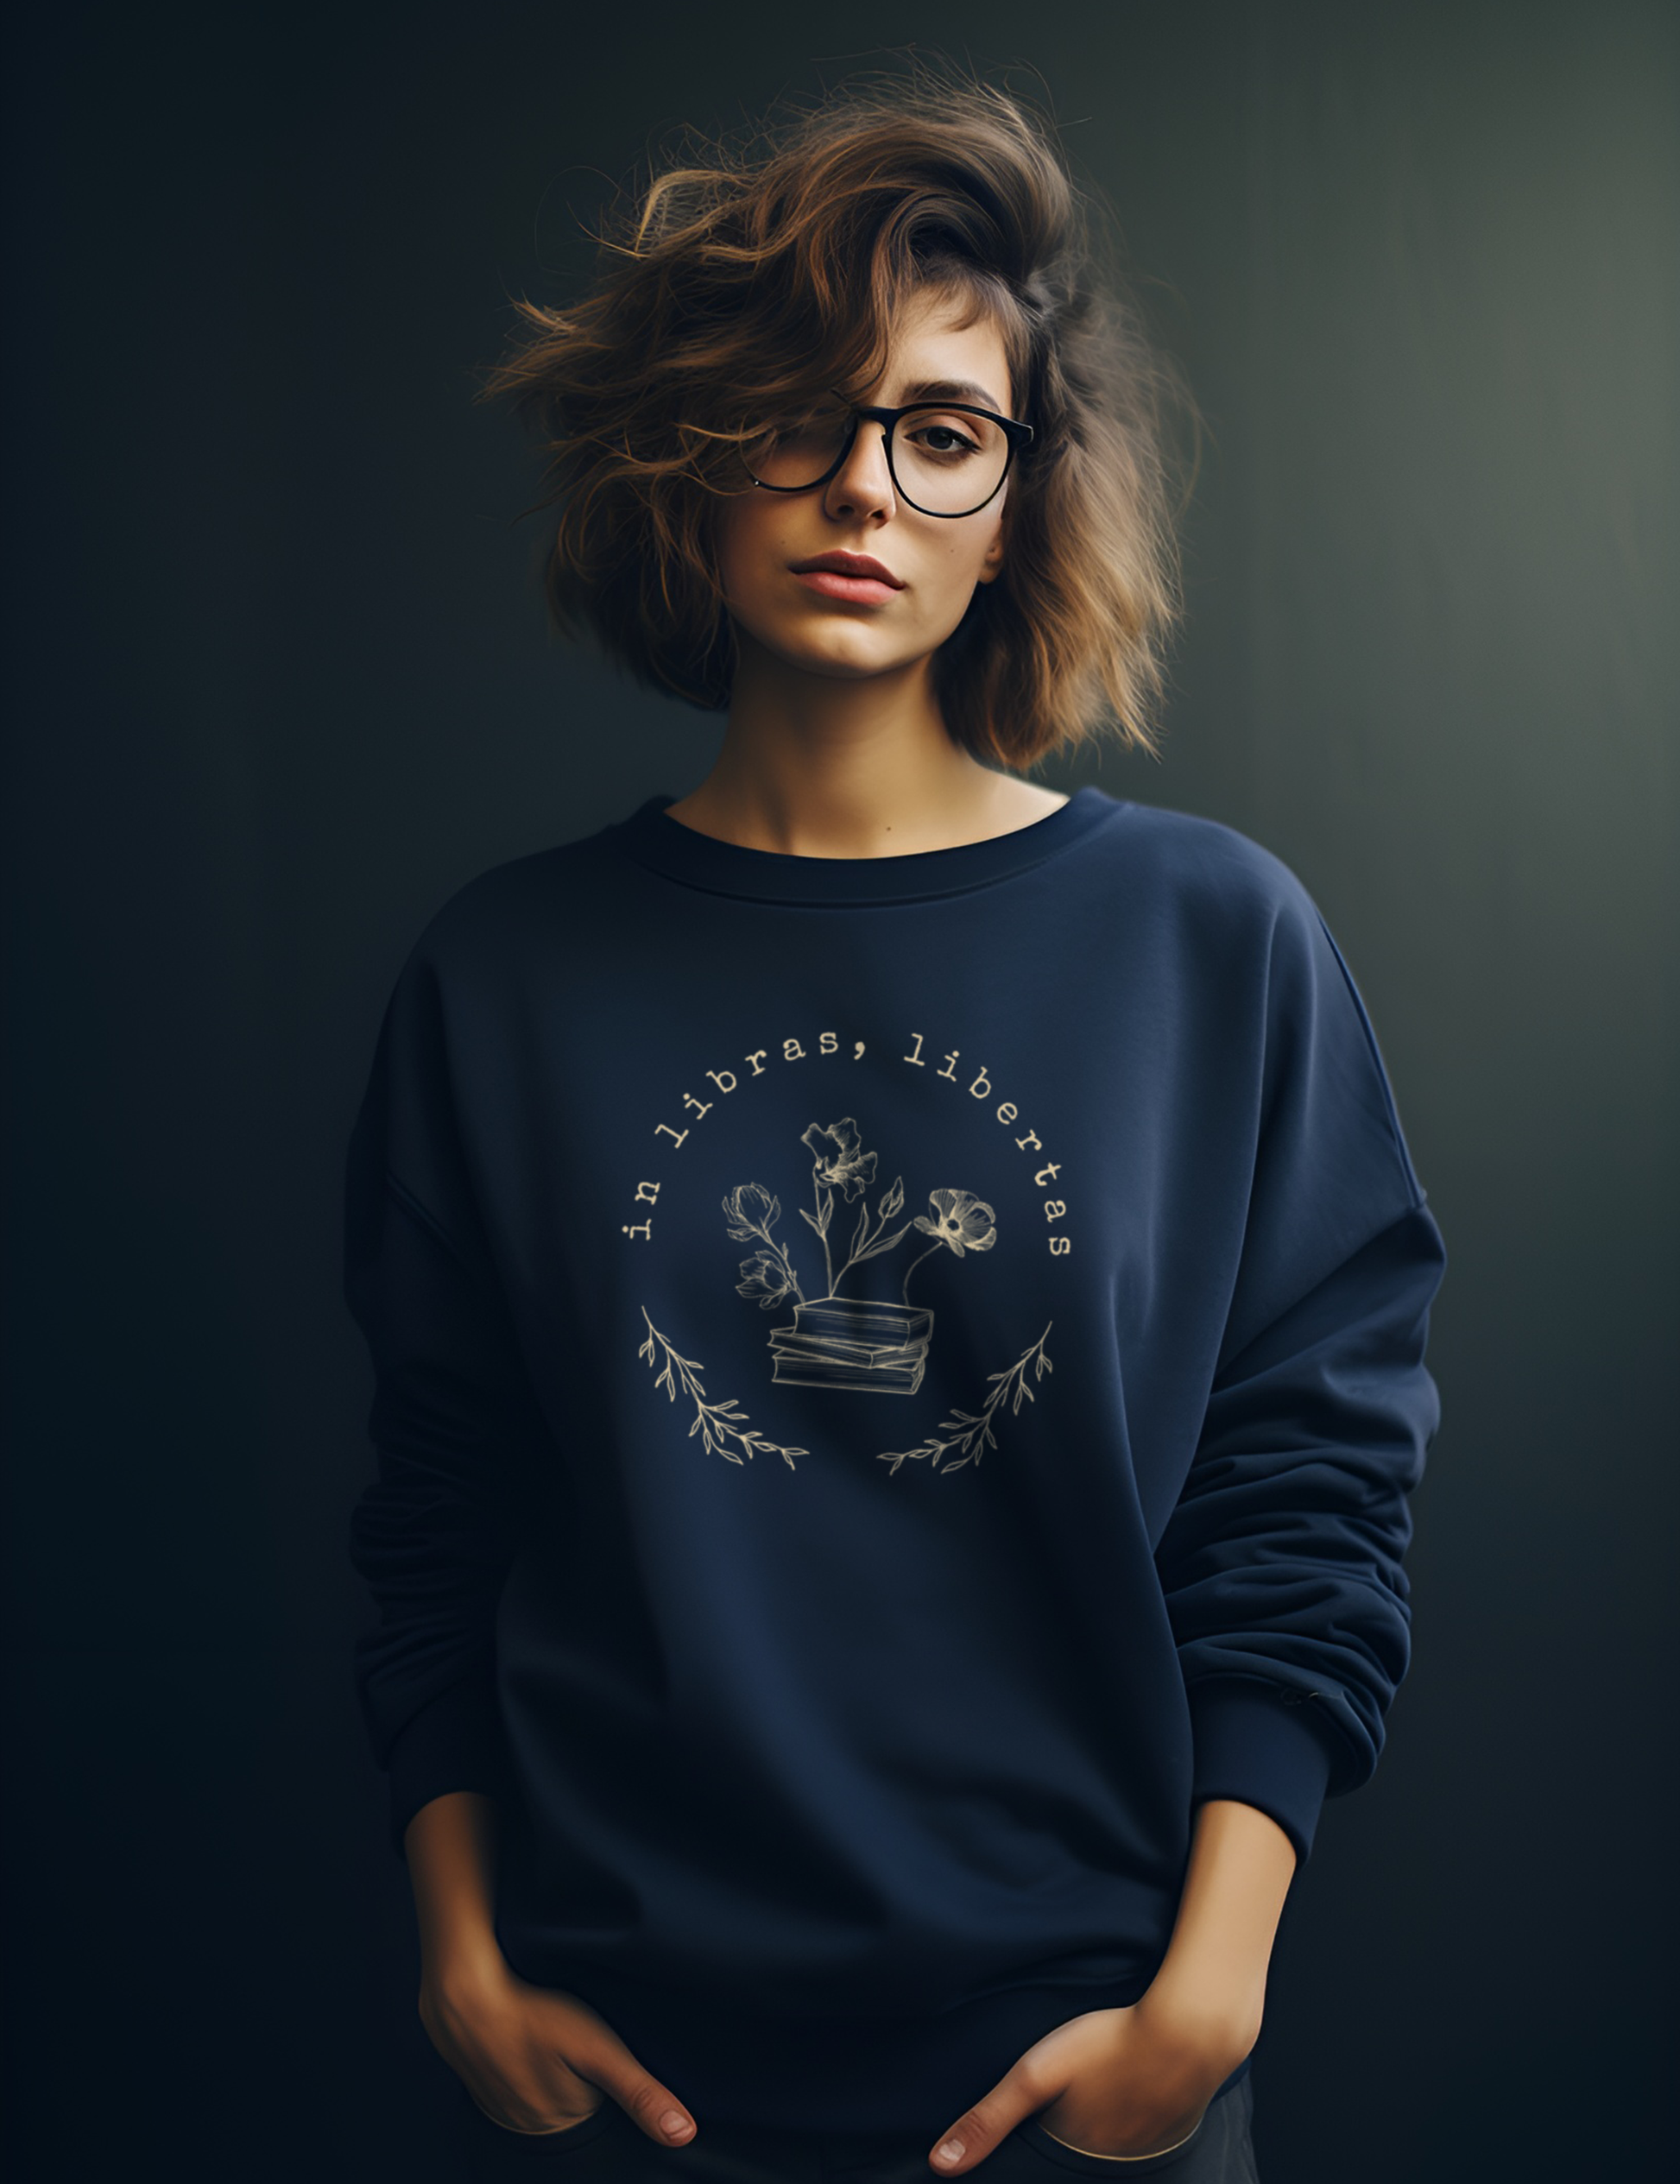 Dark Academia Aesthetic Winter Outfits In Libras Libertas Bookish Sweatshirt